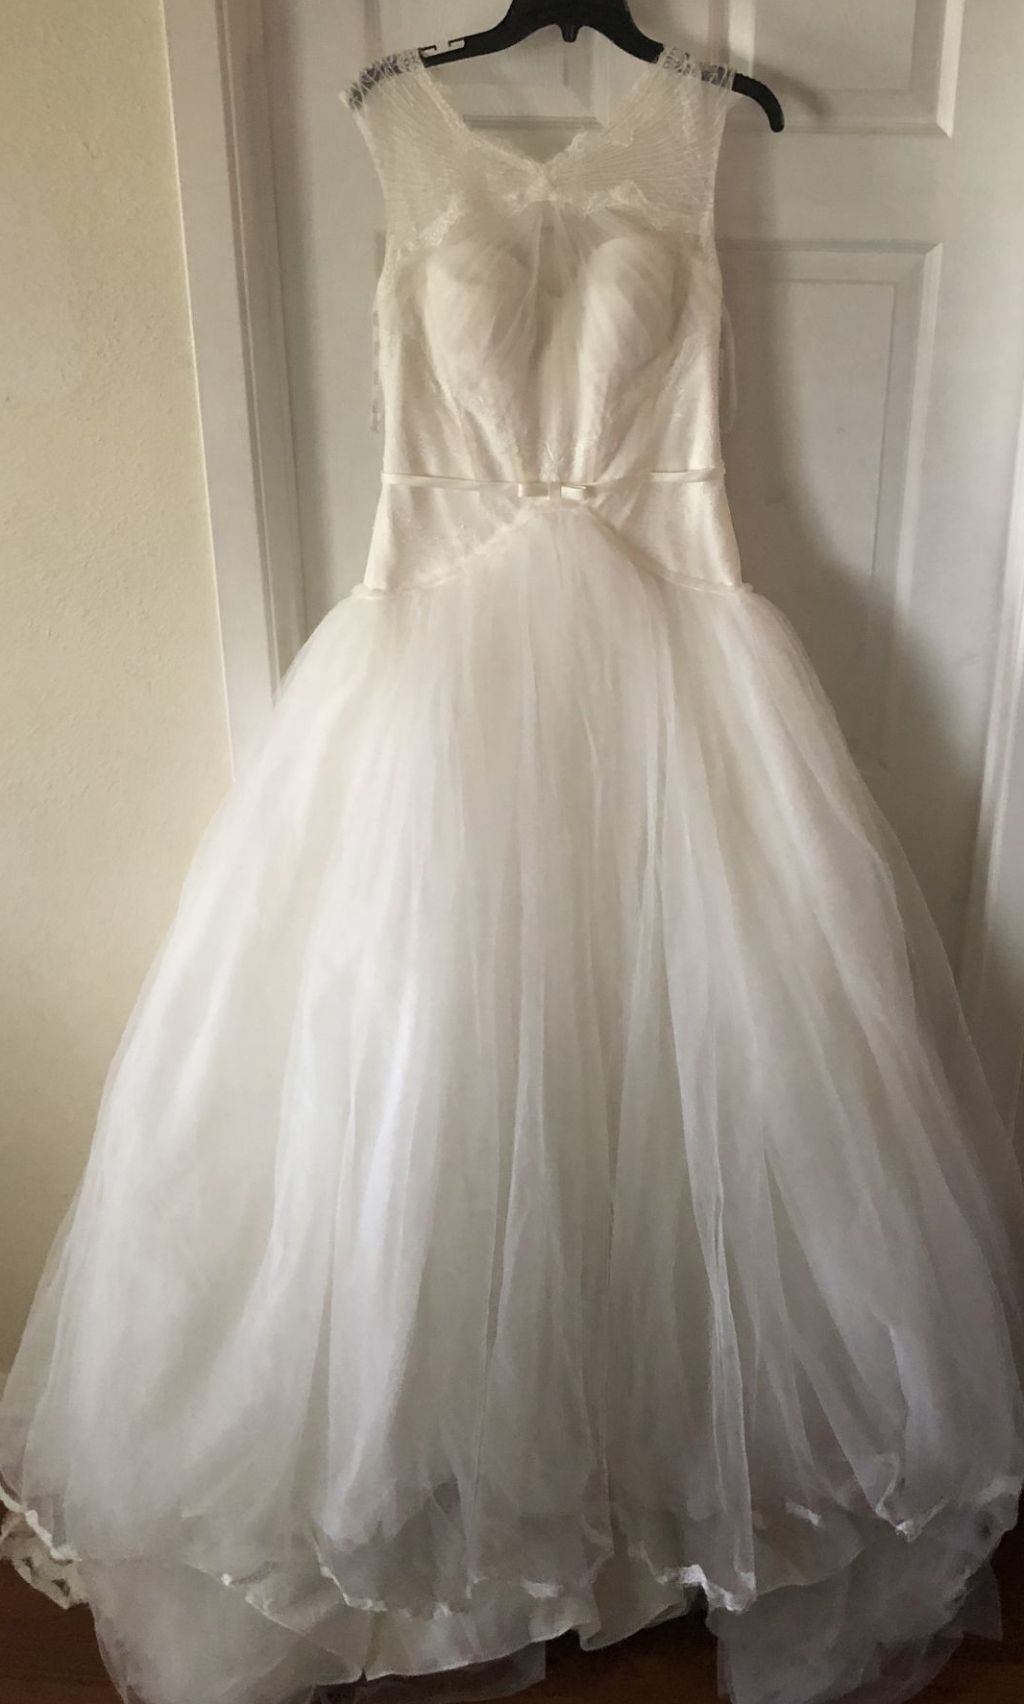 Zac Posen '345016' size 8 new wedding dress front view on hanger